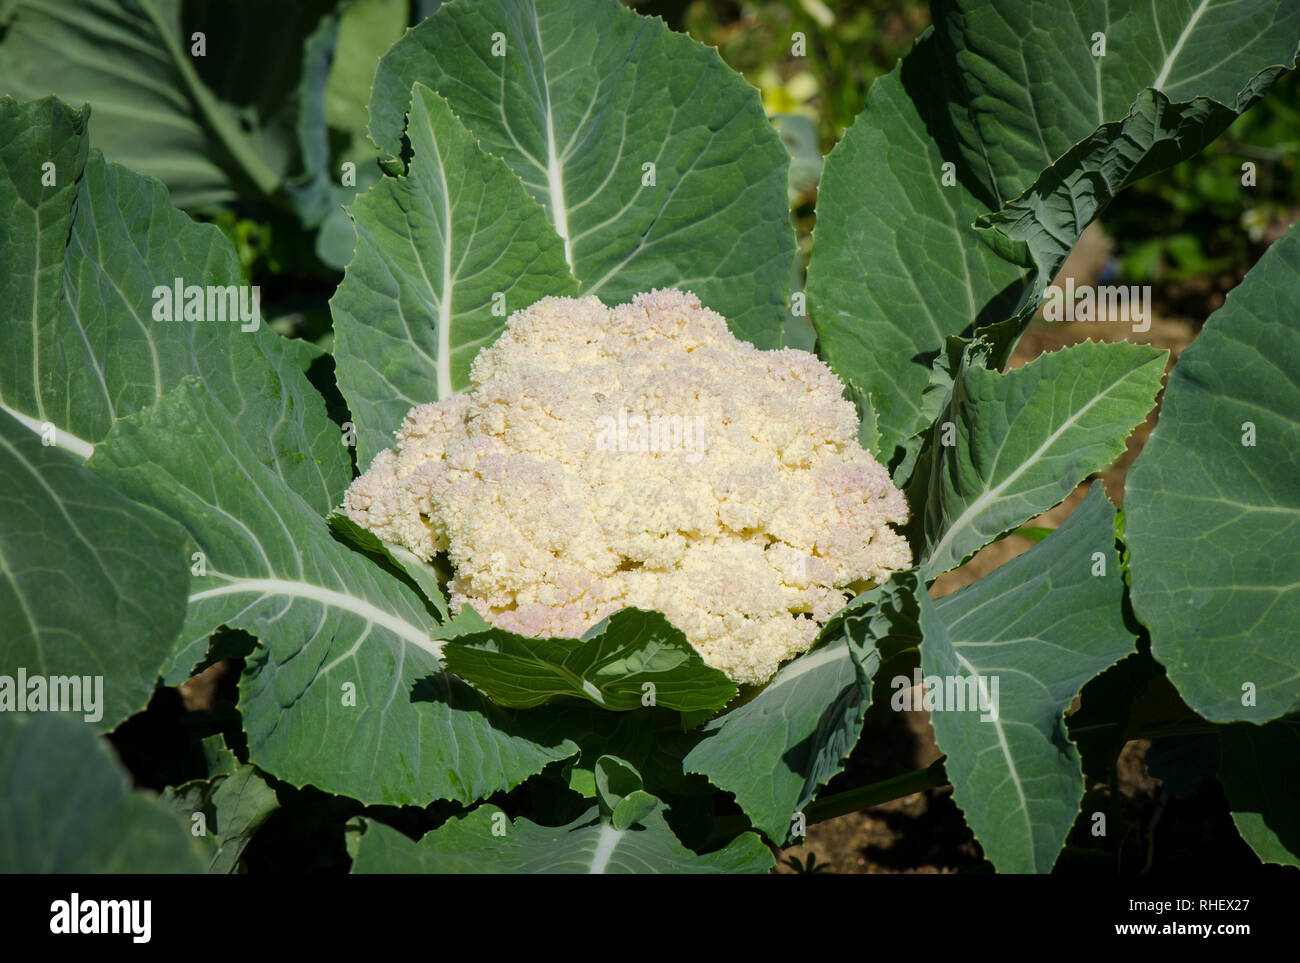 Cauliflower heads plants, Cauliflowers, growing in field. Stock Photo